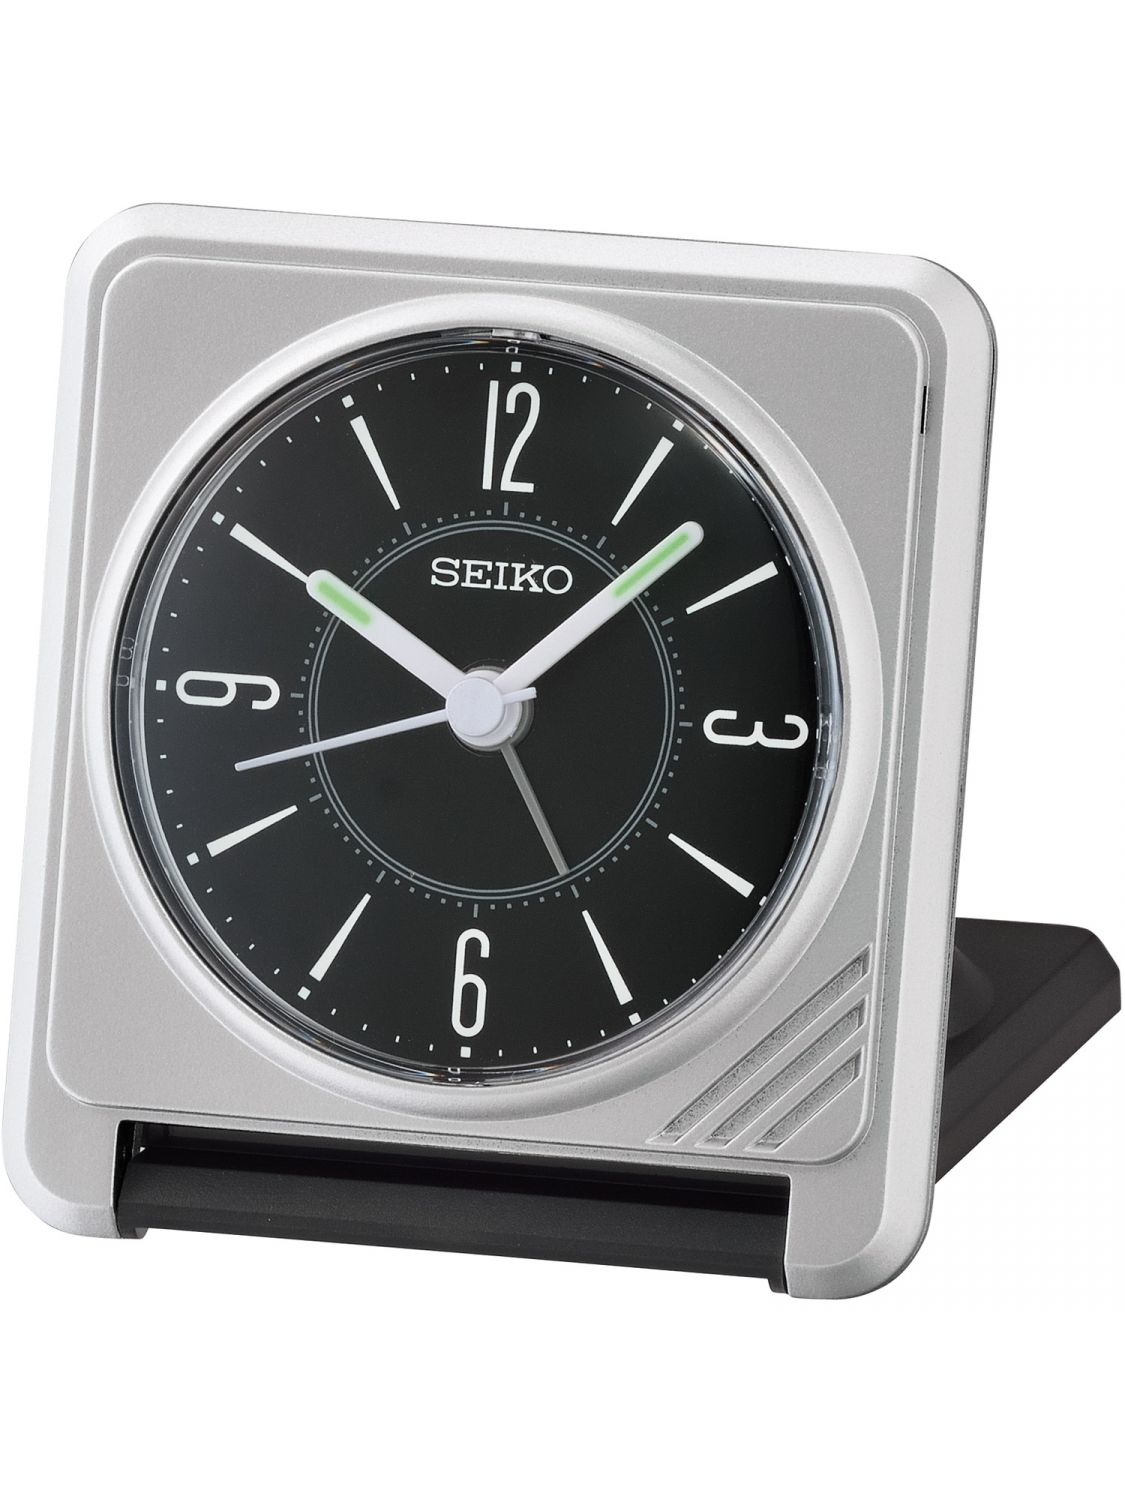 SEIKO QHT015A Travel Alarm Clock Black / Silver • uhrcenter